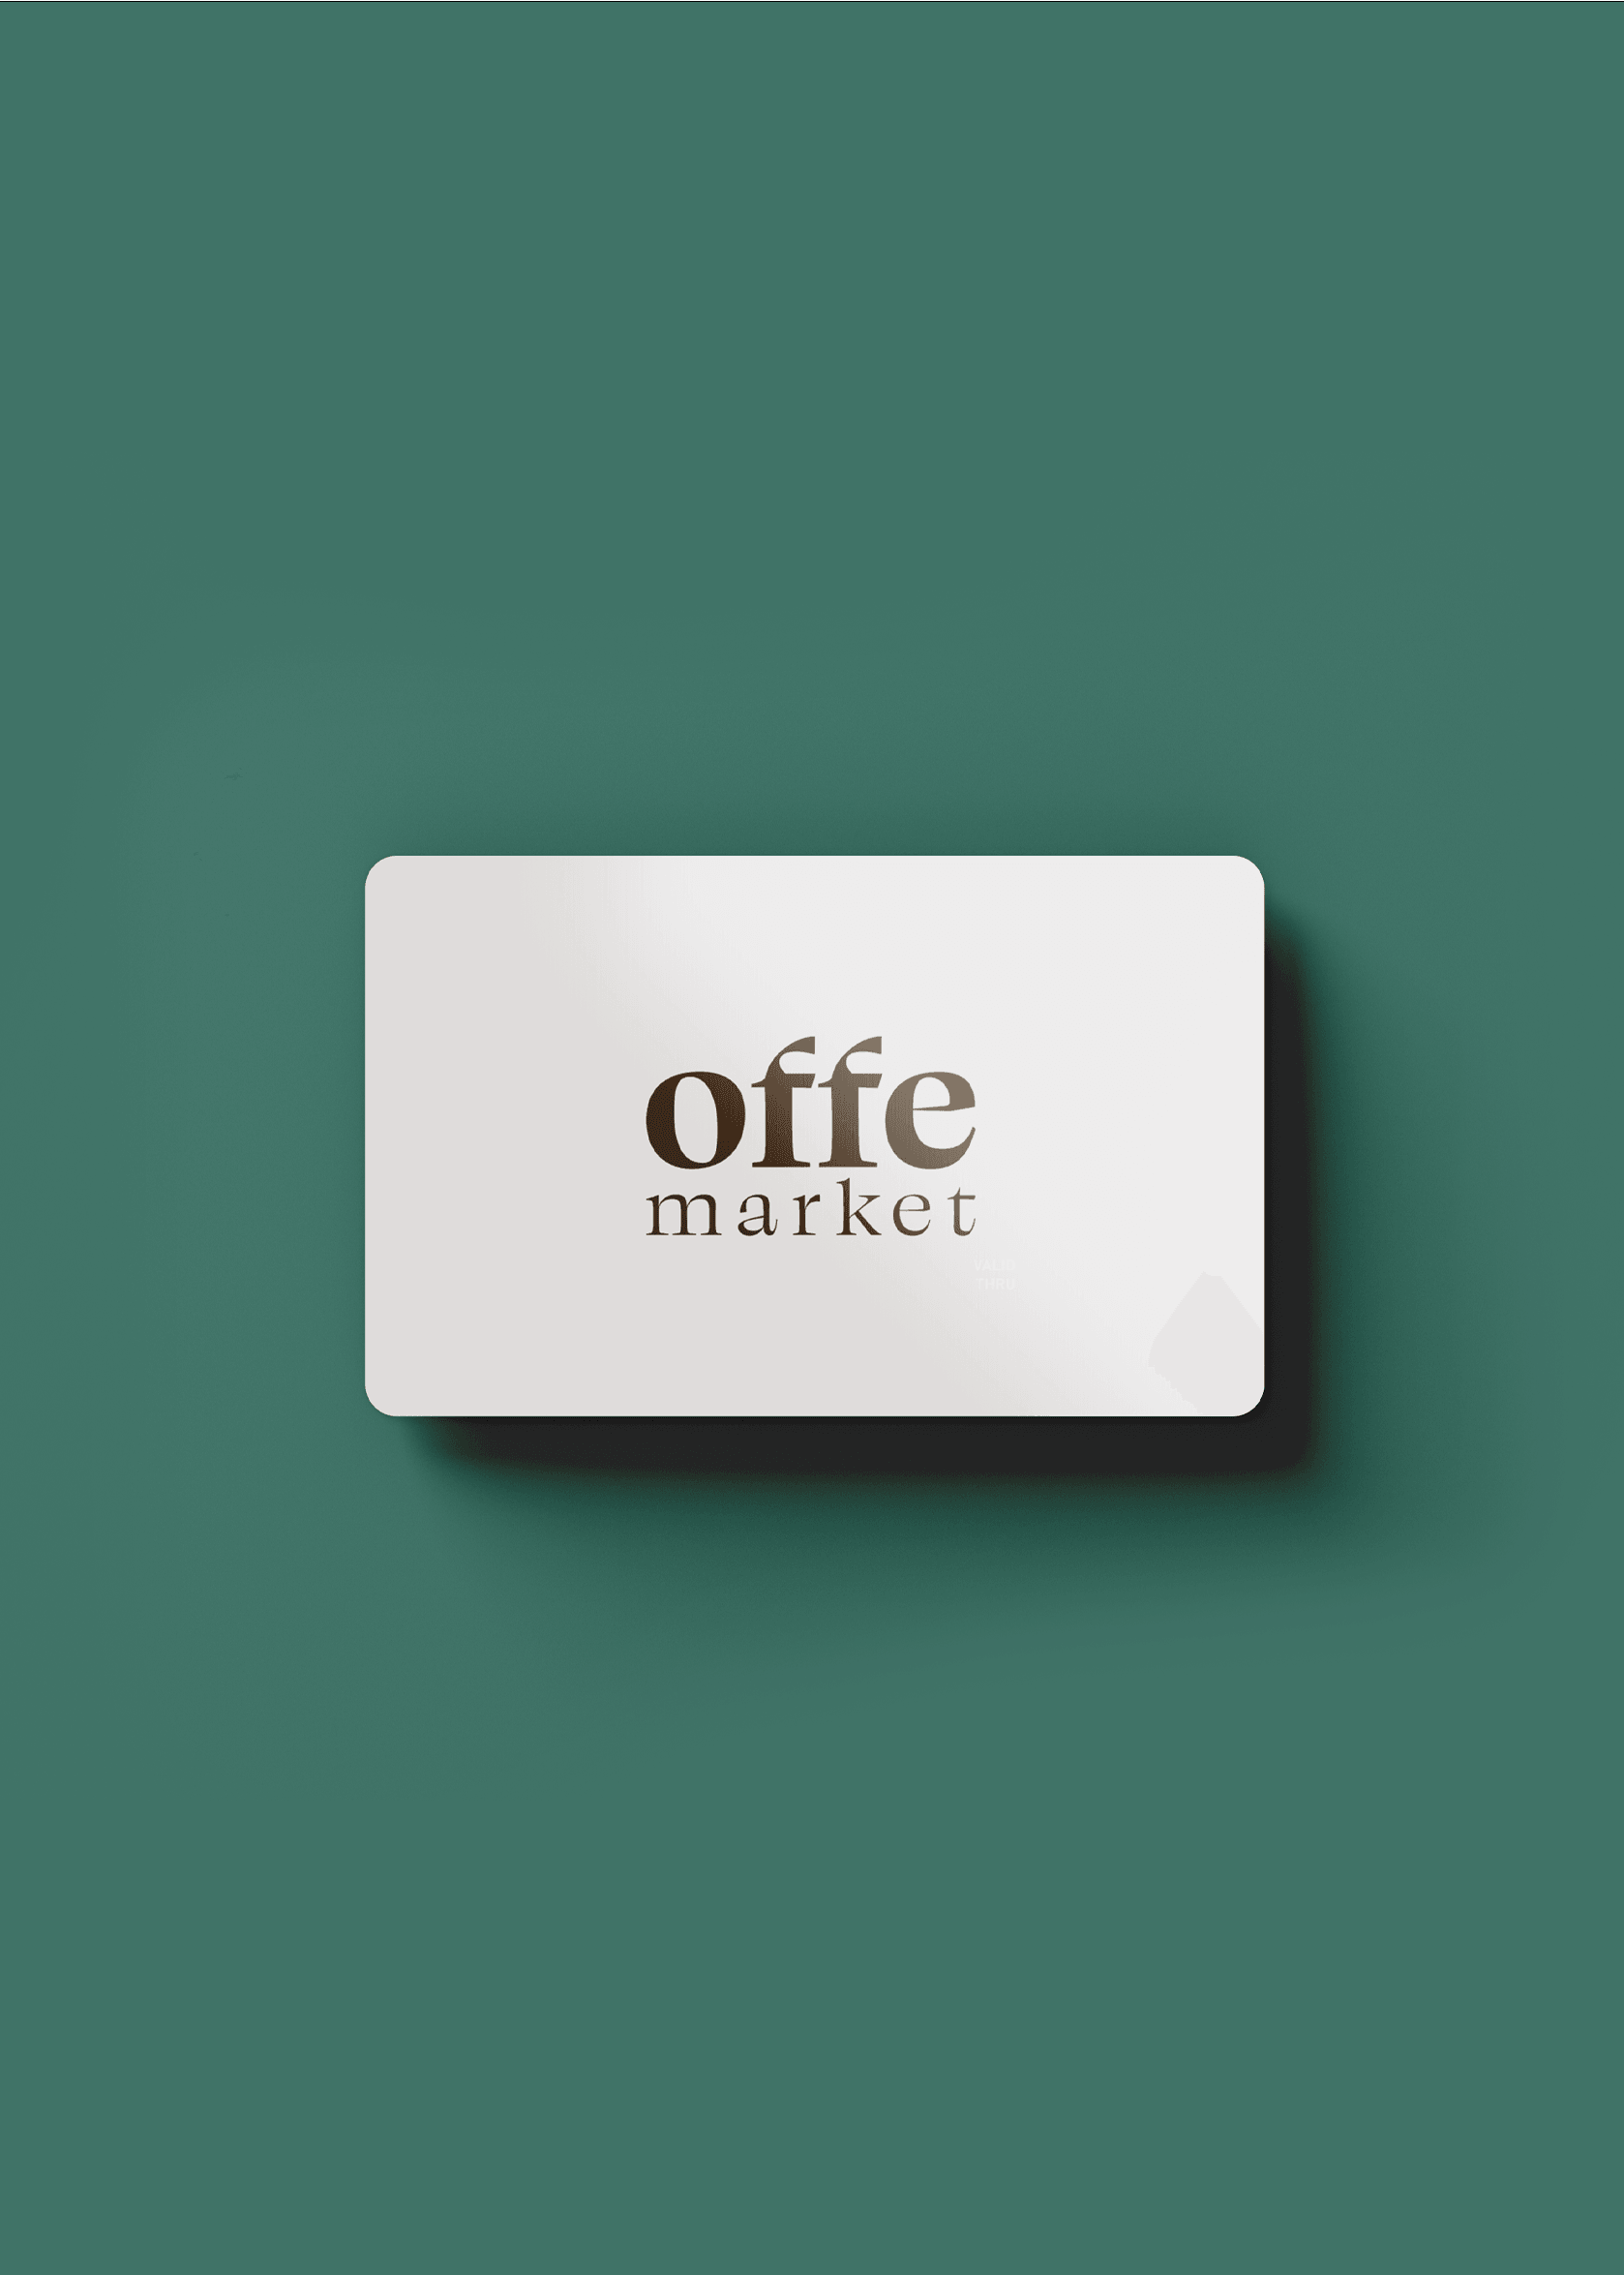 offe market gift card - offe market